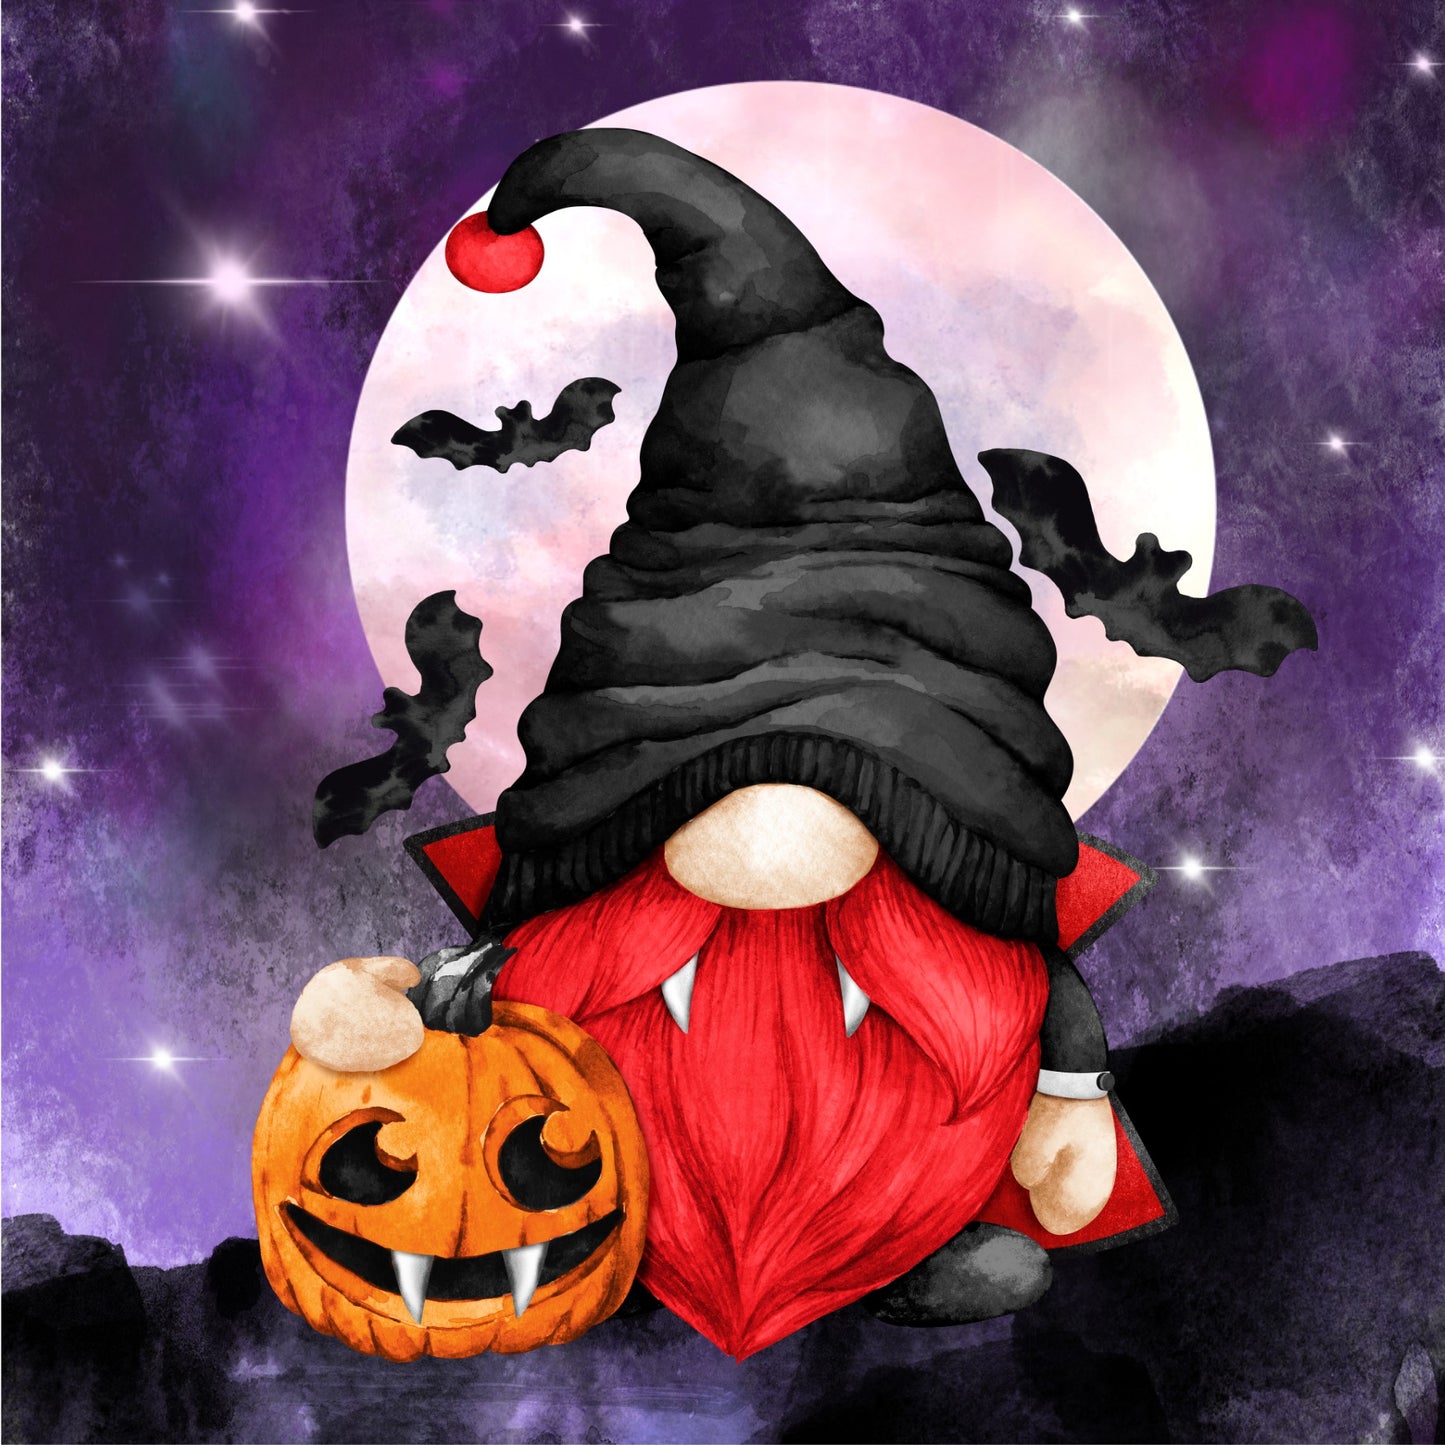 Coaster Set - Halloween Gnomes - Set of 4